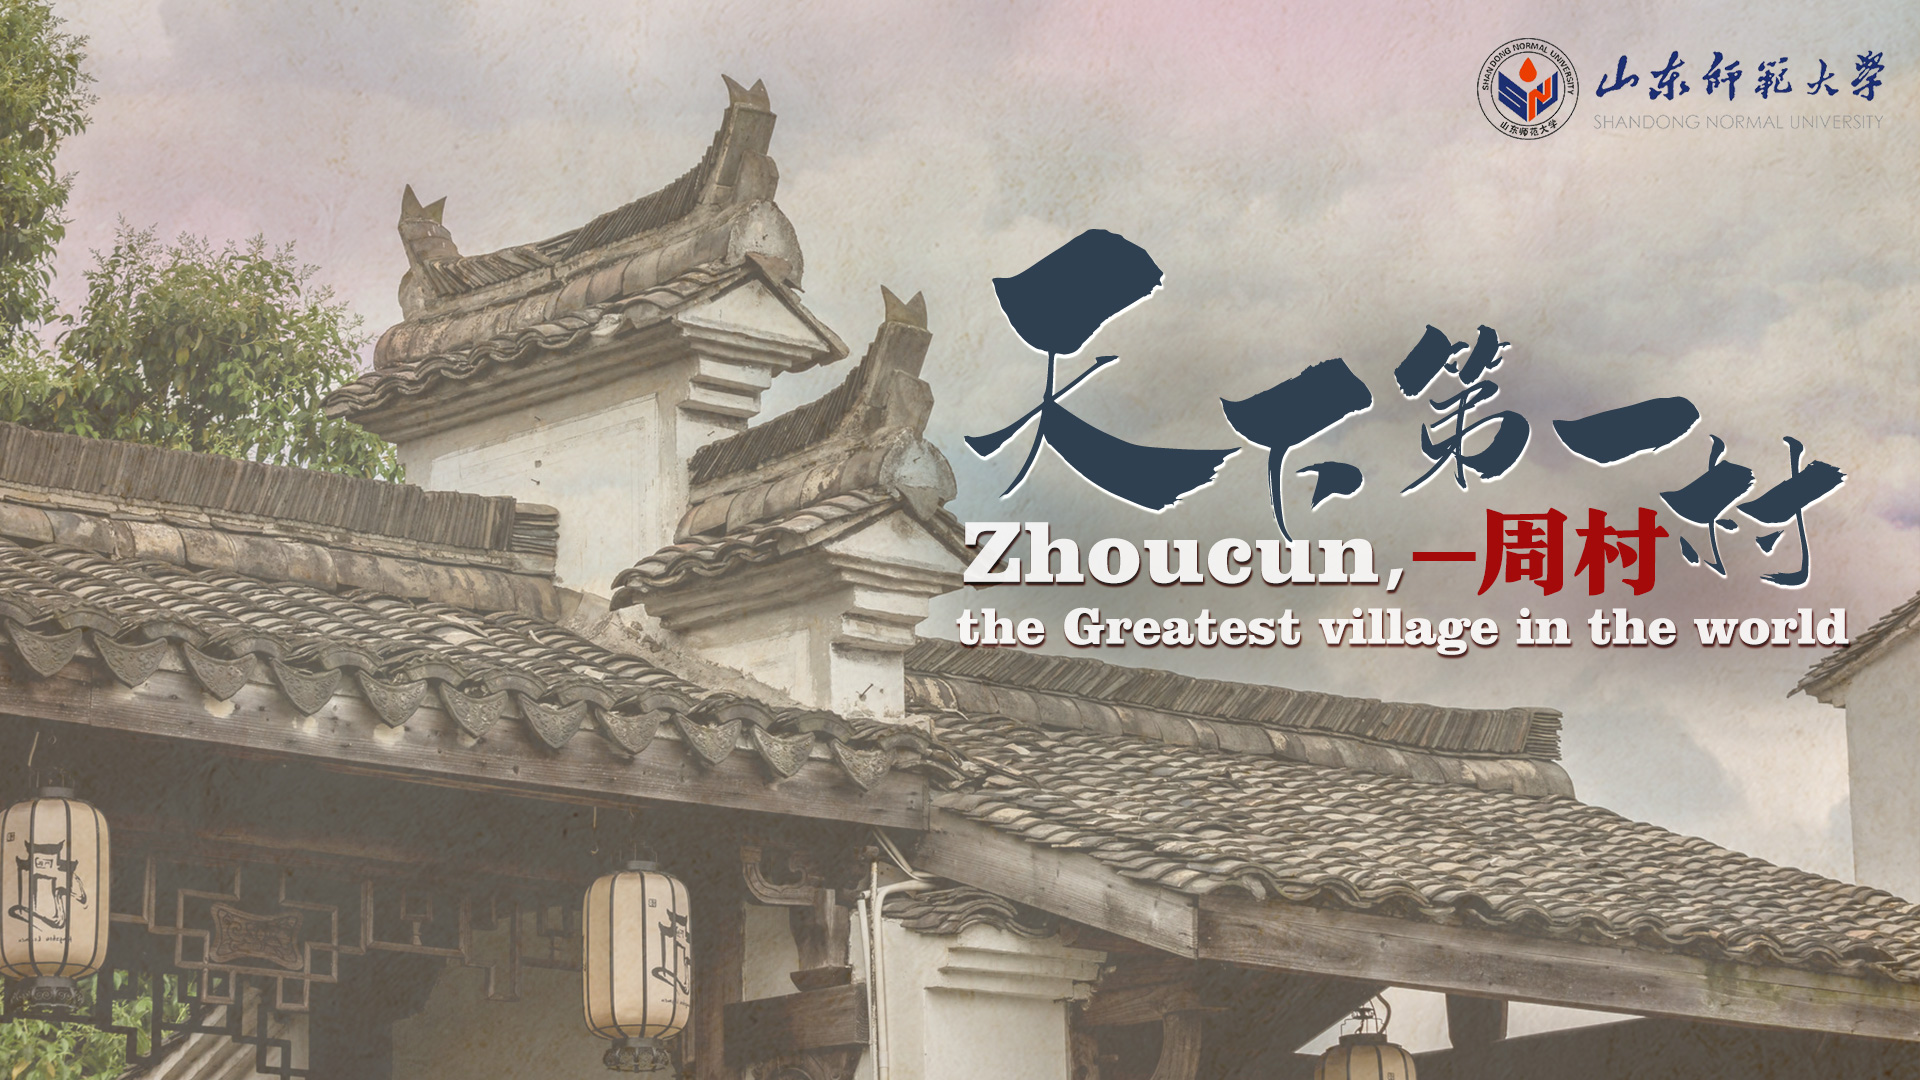 Zhoucun, the Greatest village in the world